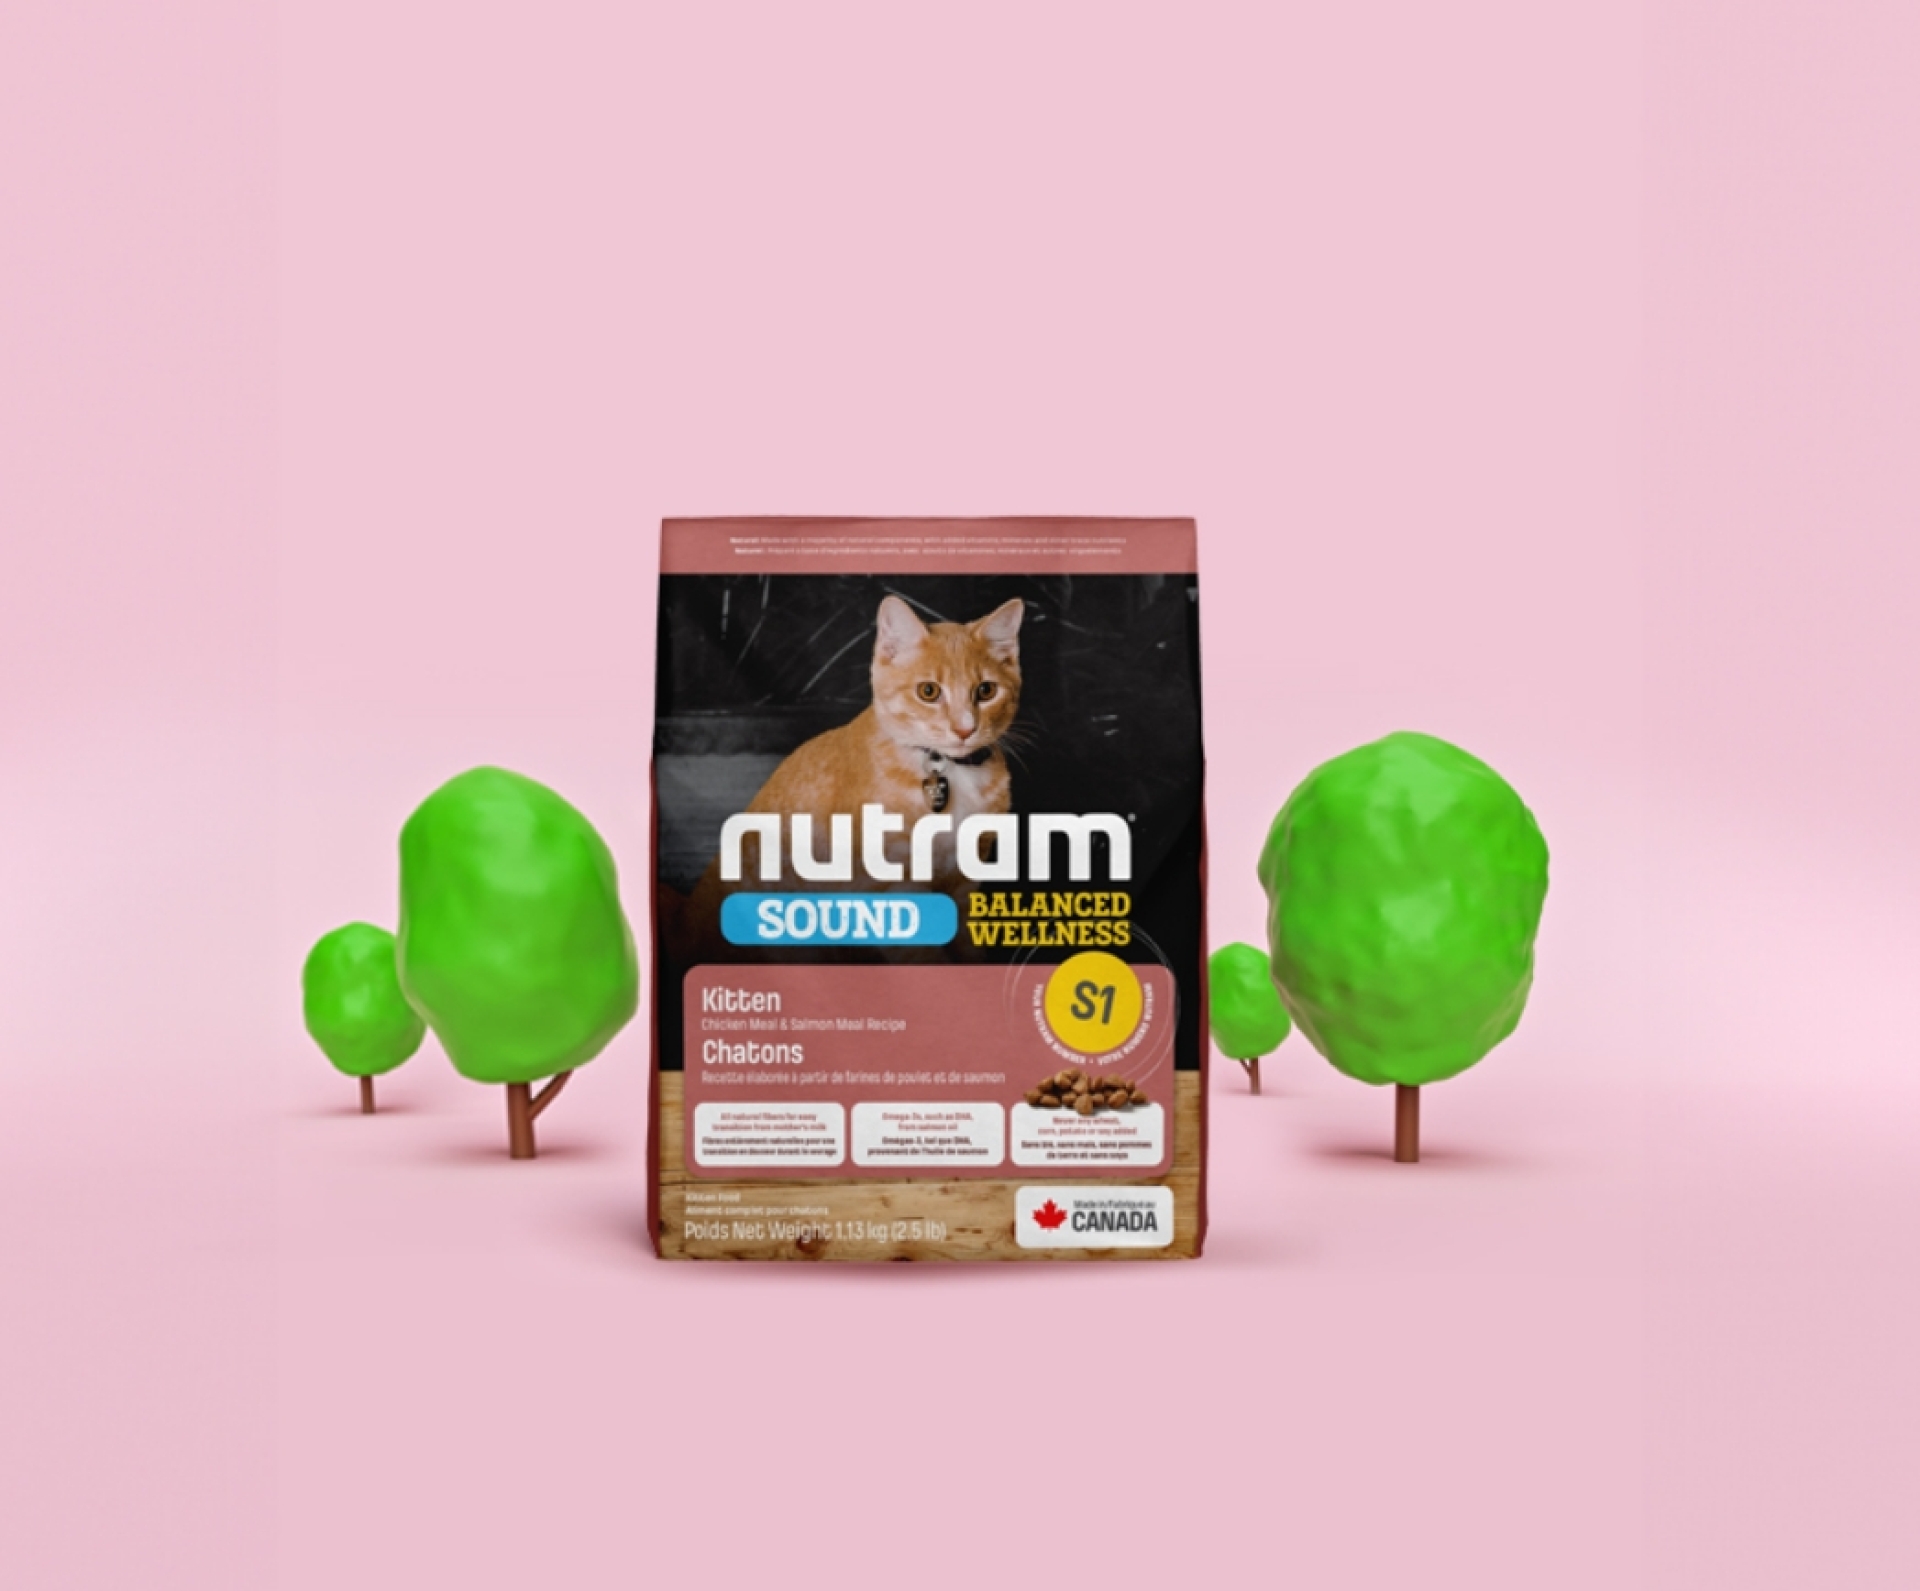 Nutram email marketing campaign logo